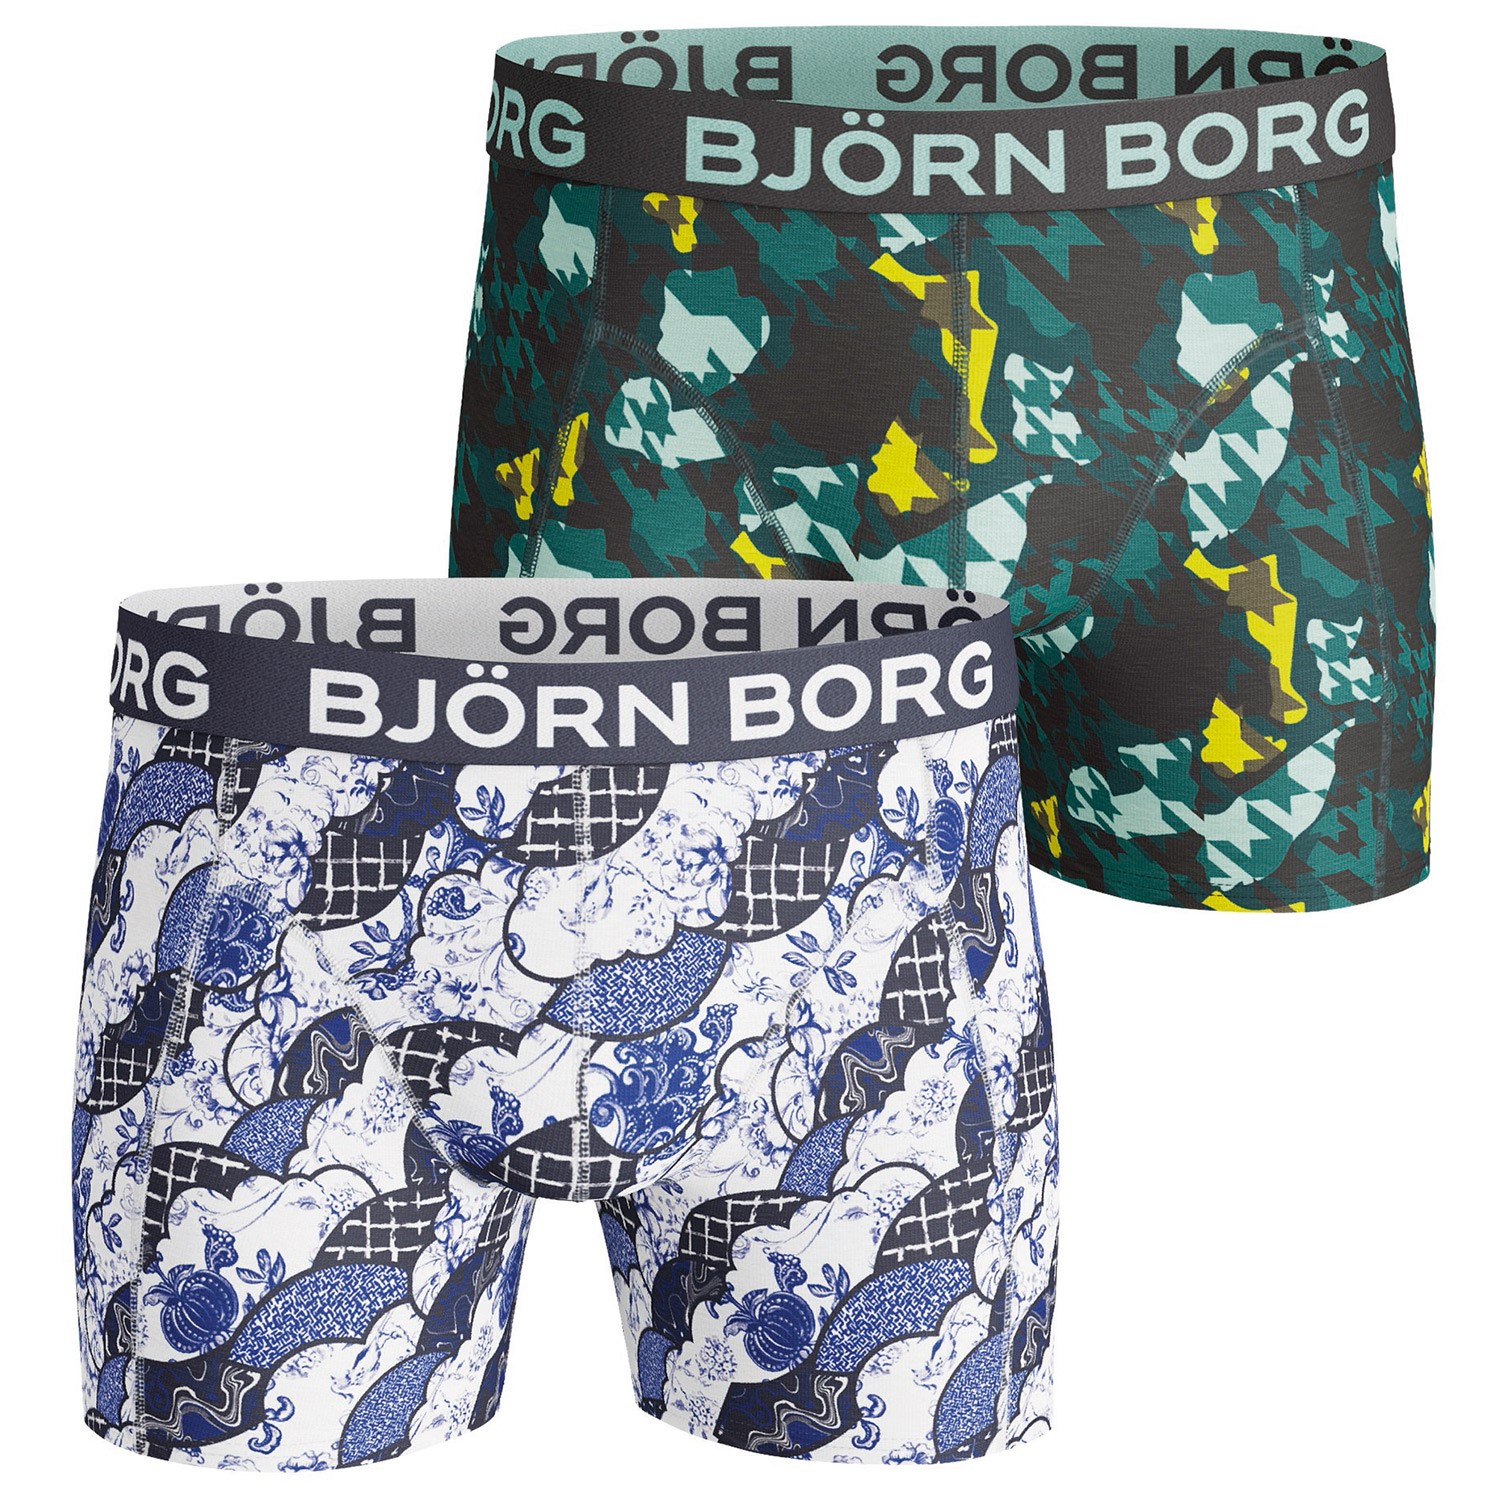 Björn Borg Porceleain Shade And Houndtooth Shorts 